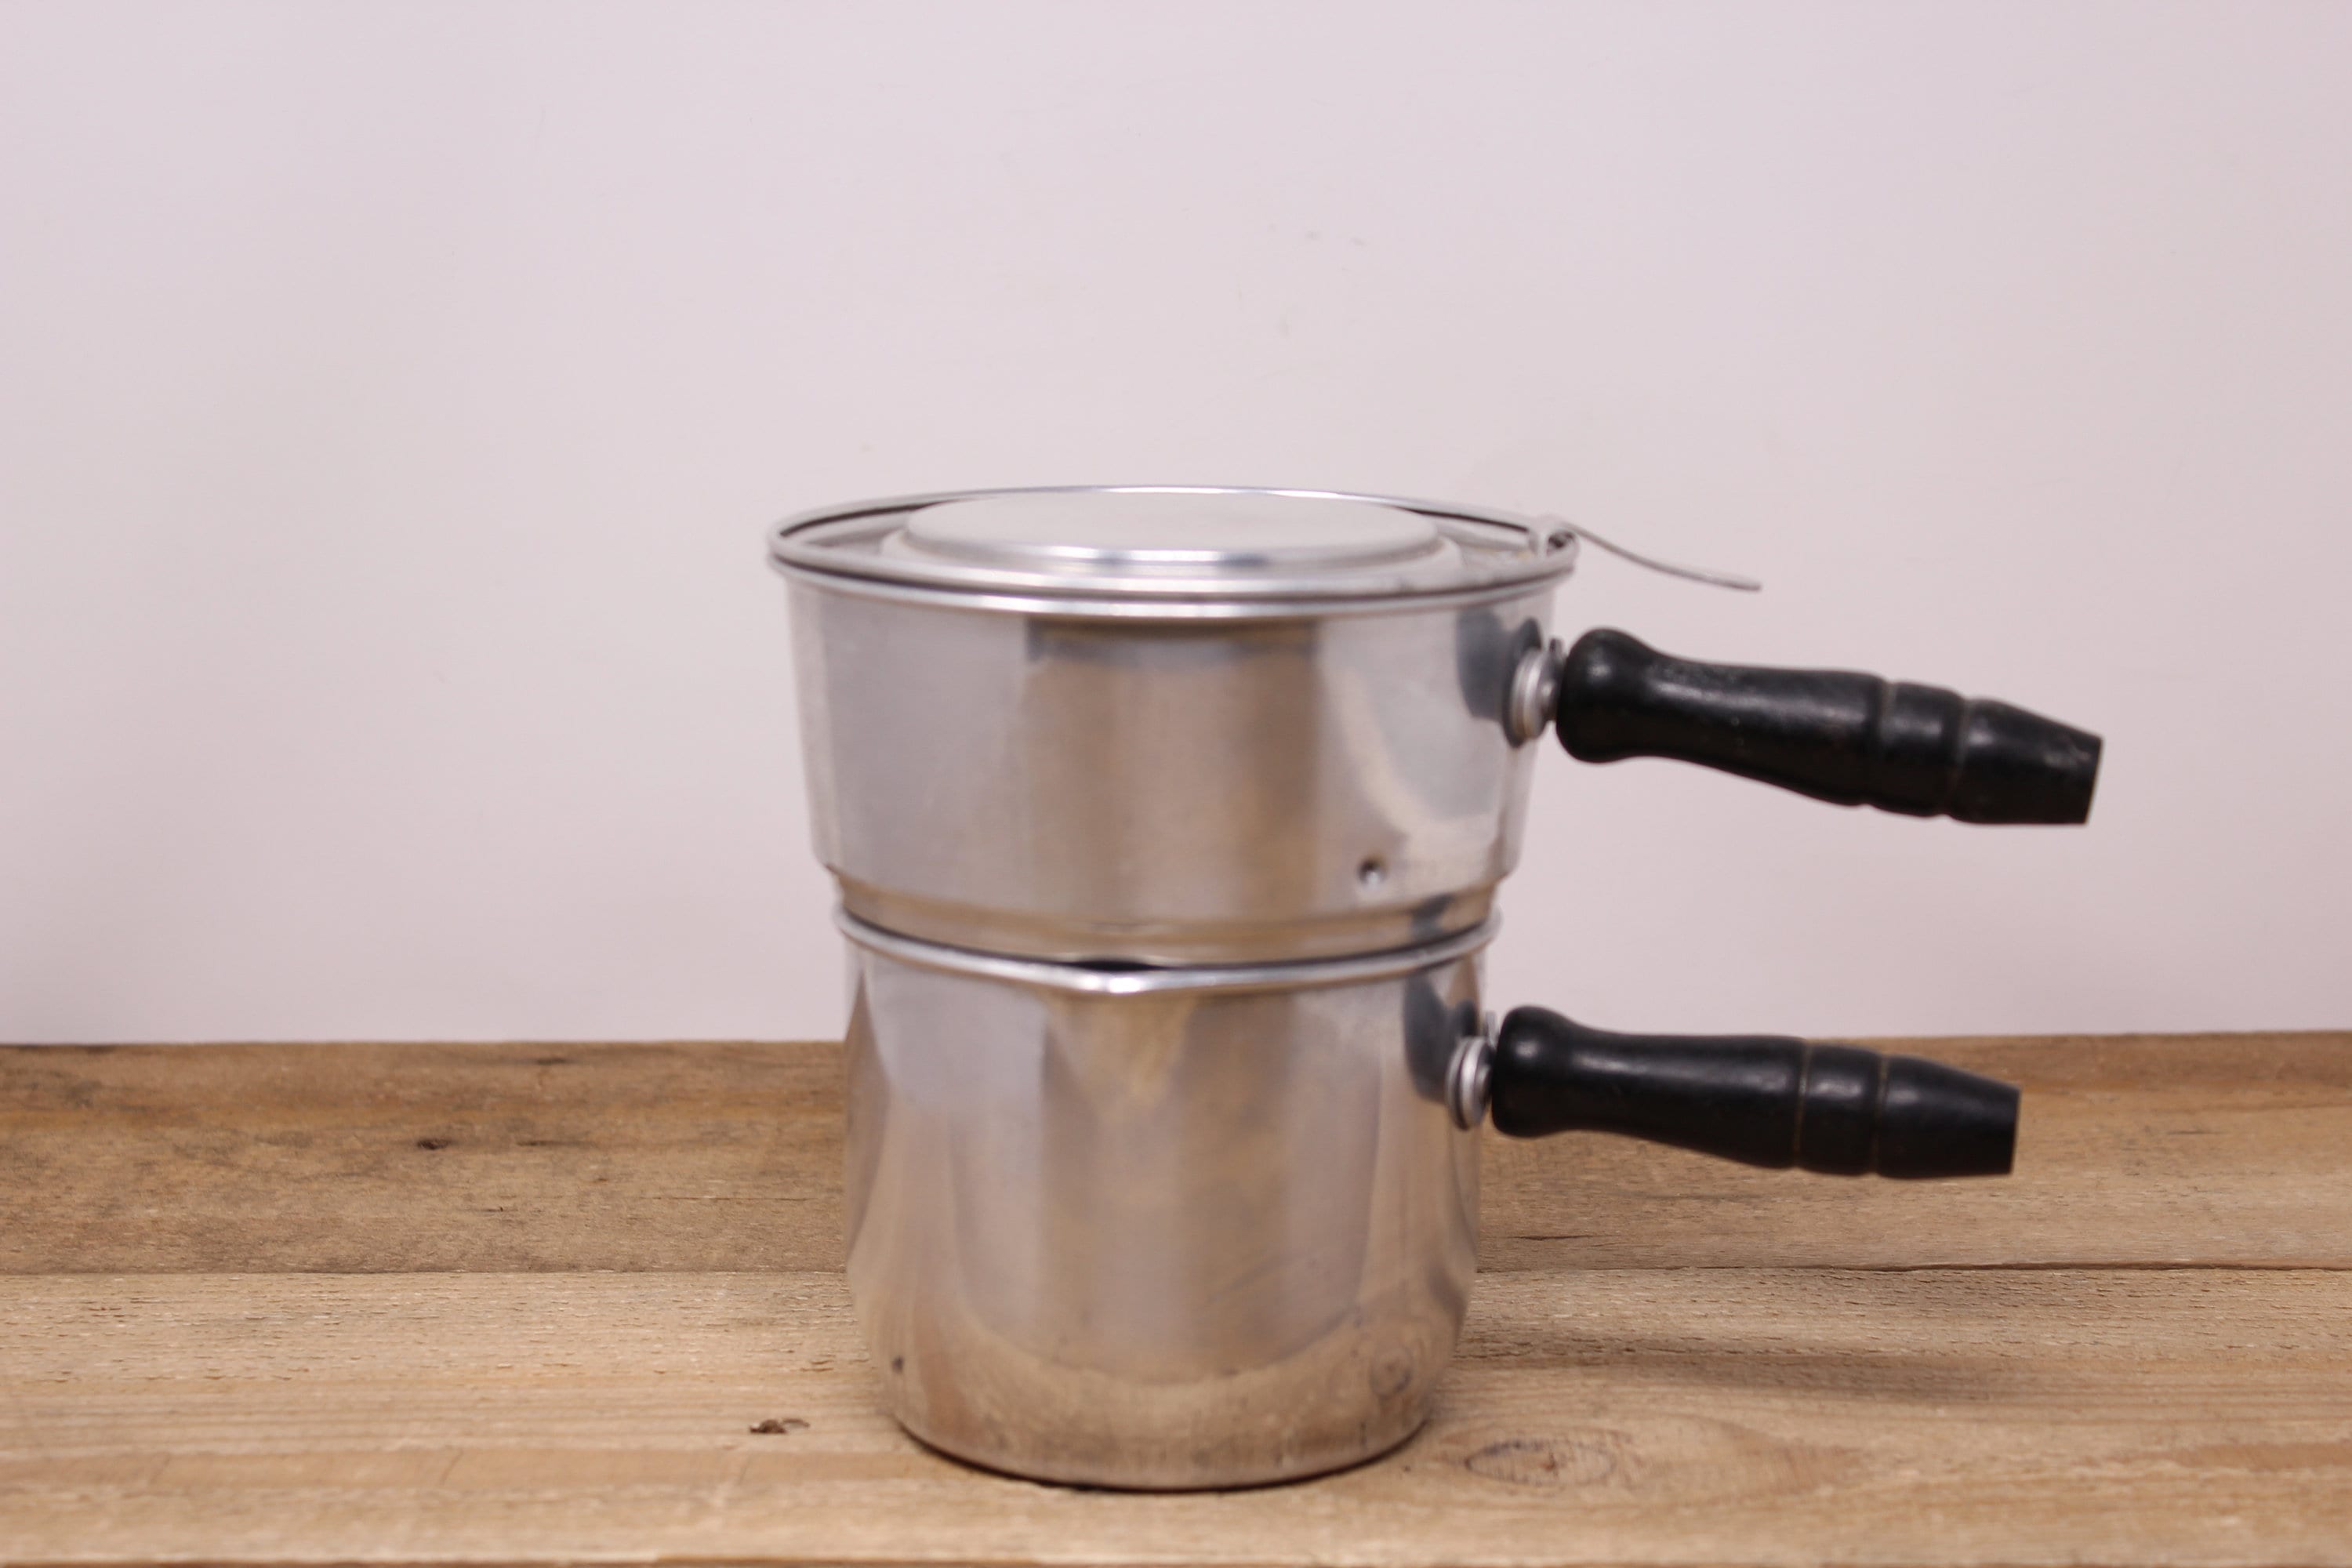 Vintage Tricolator Party-Perk Percolator 24 Cup Automatic Coffee Maker TG-24